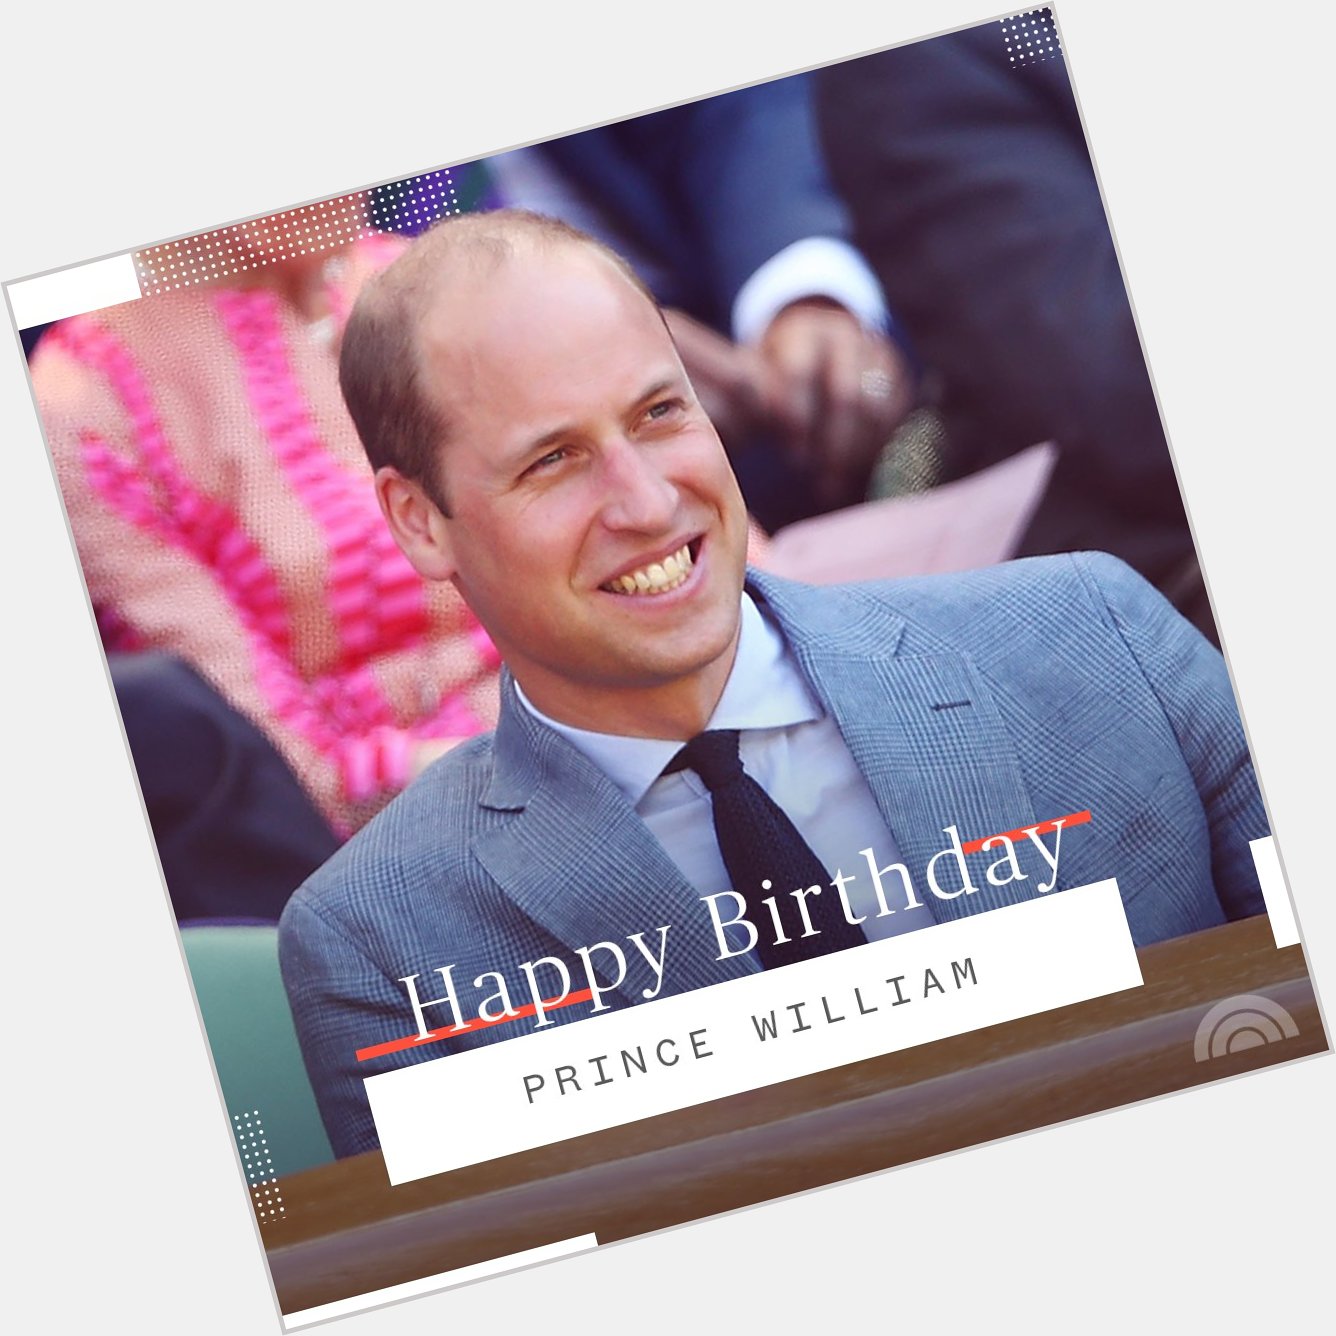 Happy birthday, Prince William! 